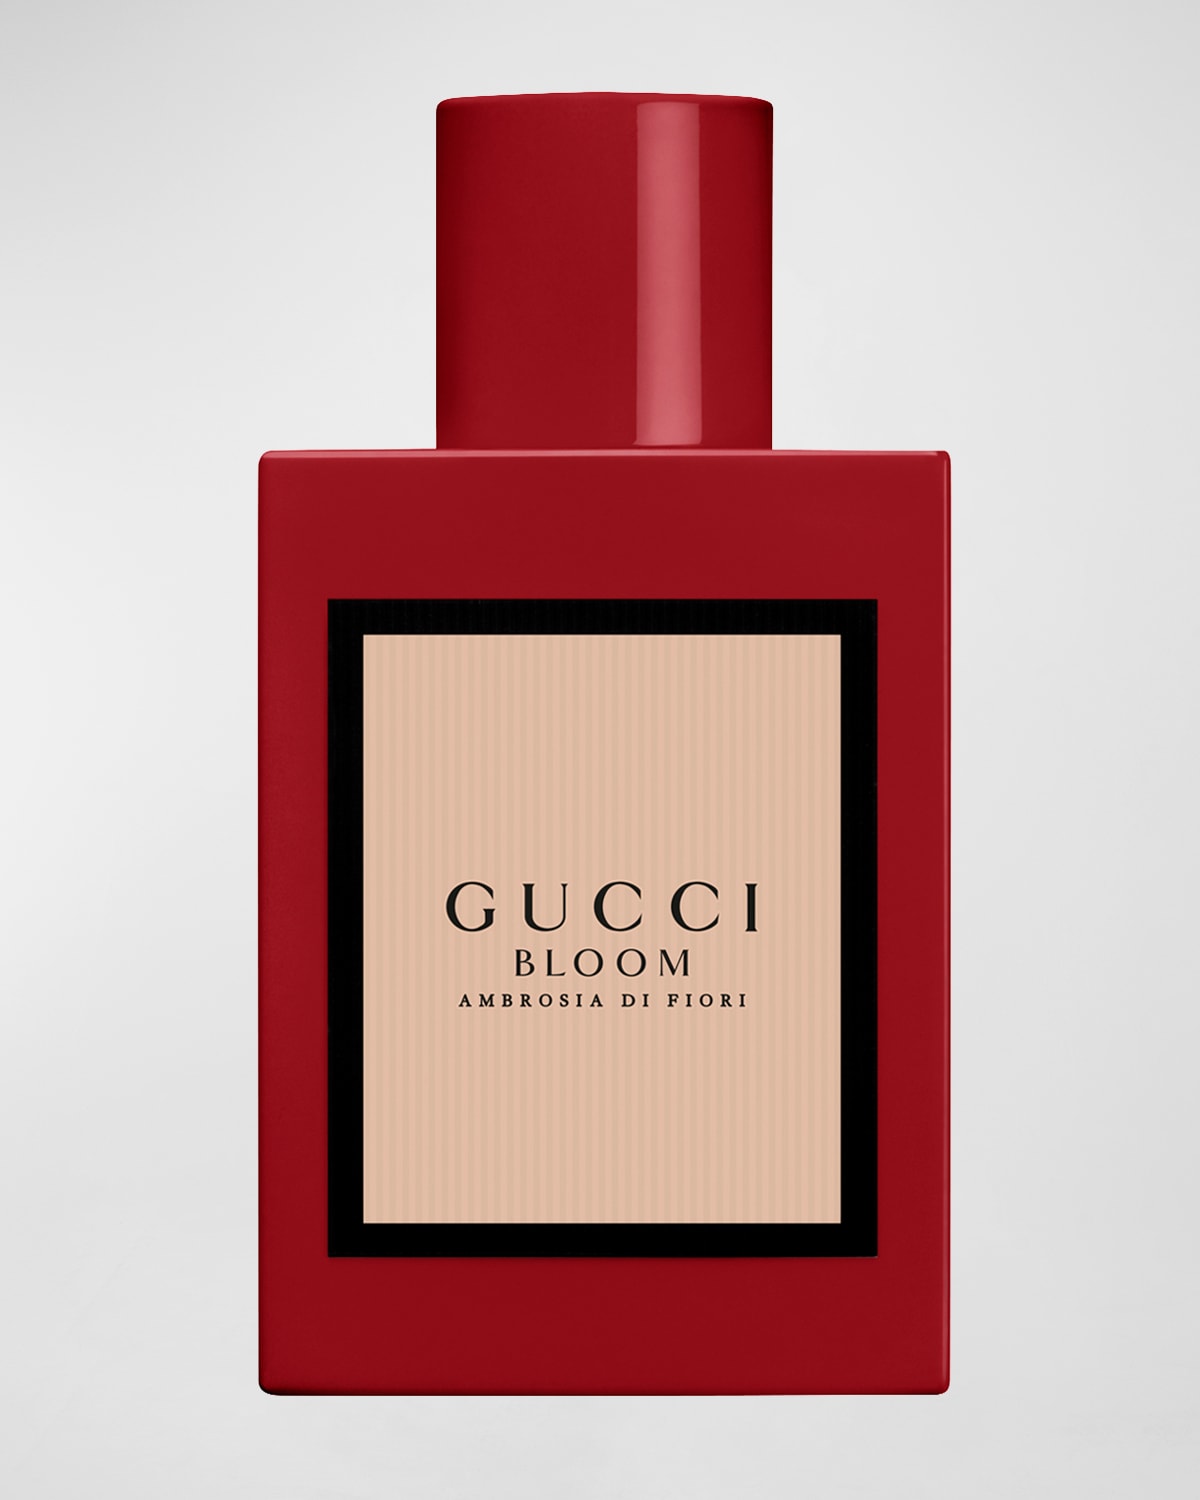 Gucci Bloom Ambrosia di Fiori Eau de Parfum, 1.7 oz.